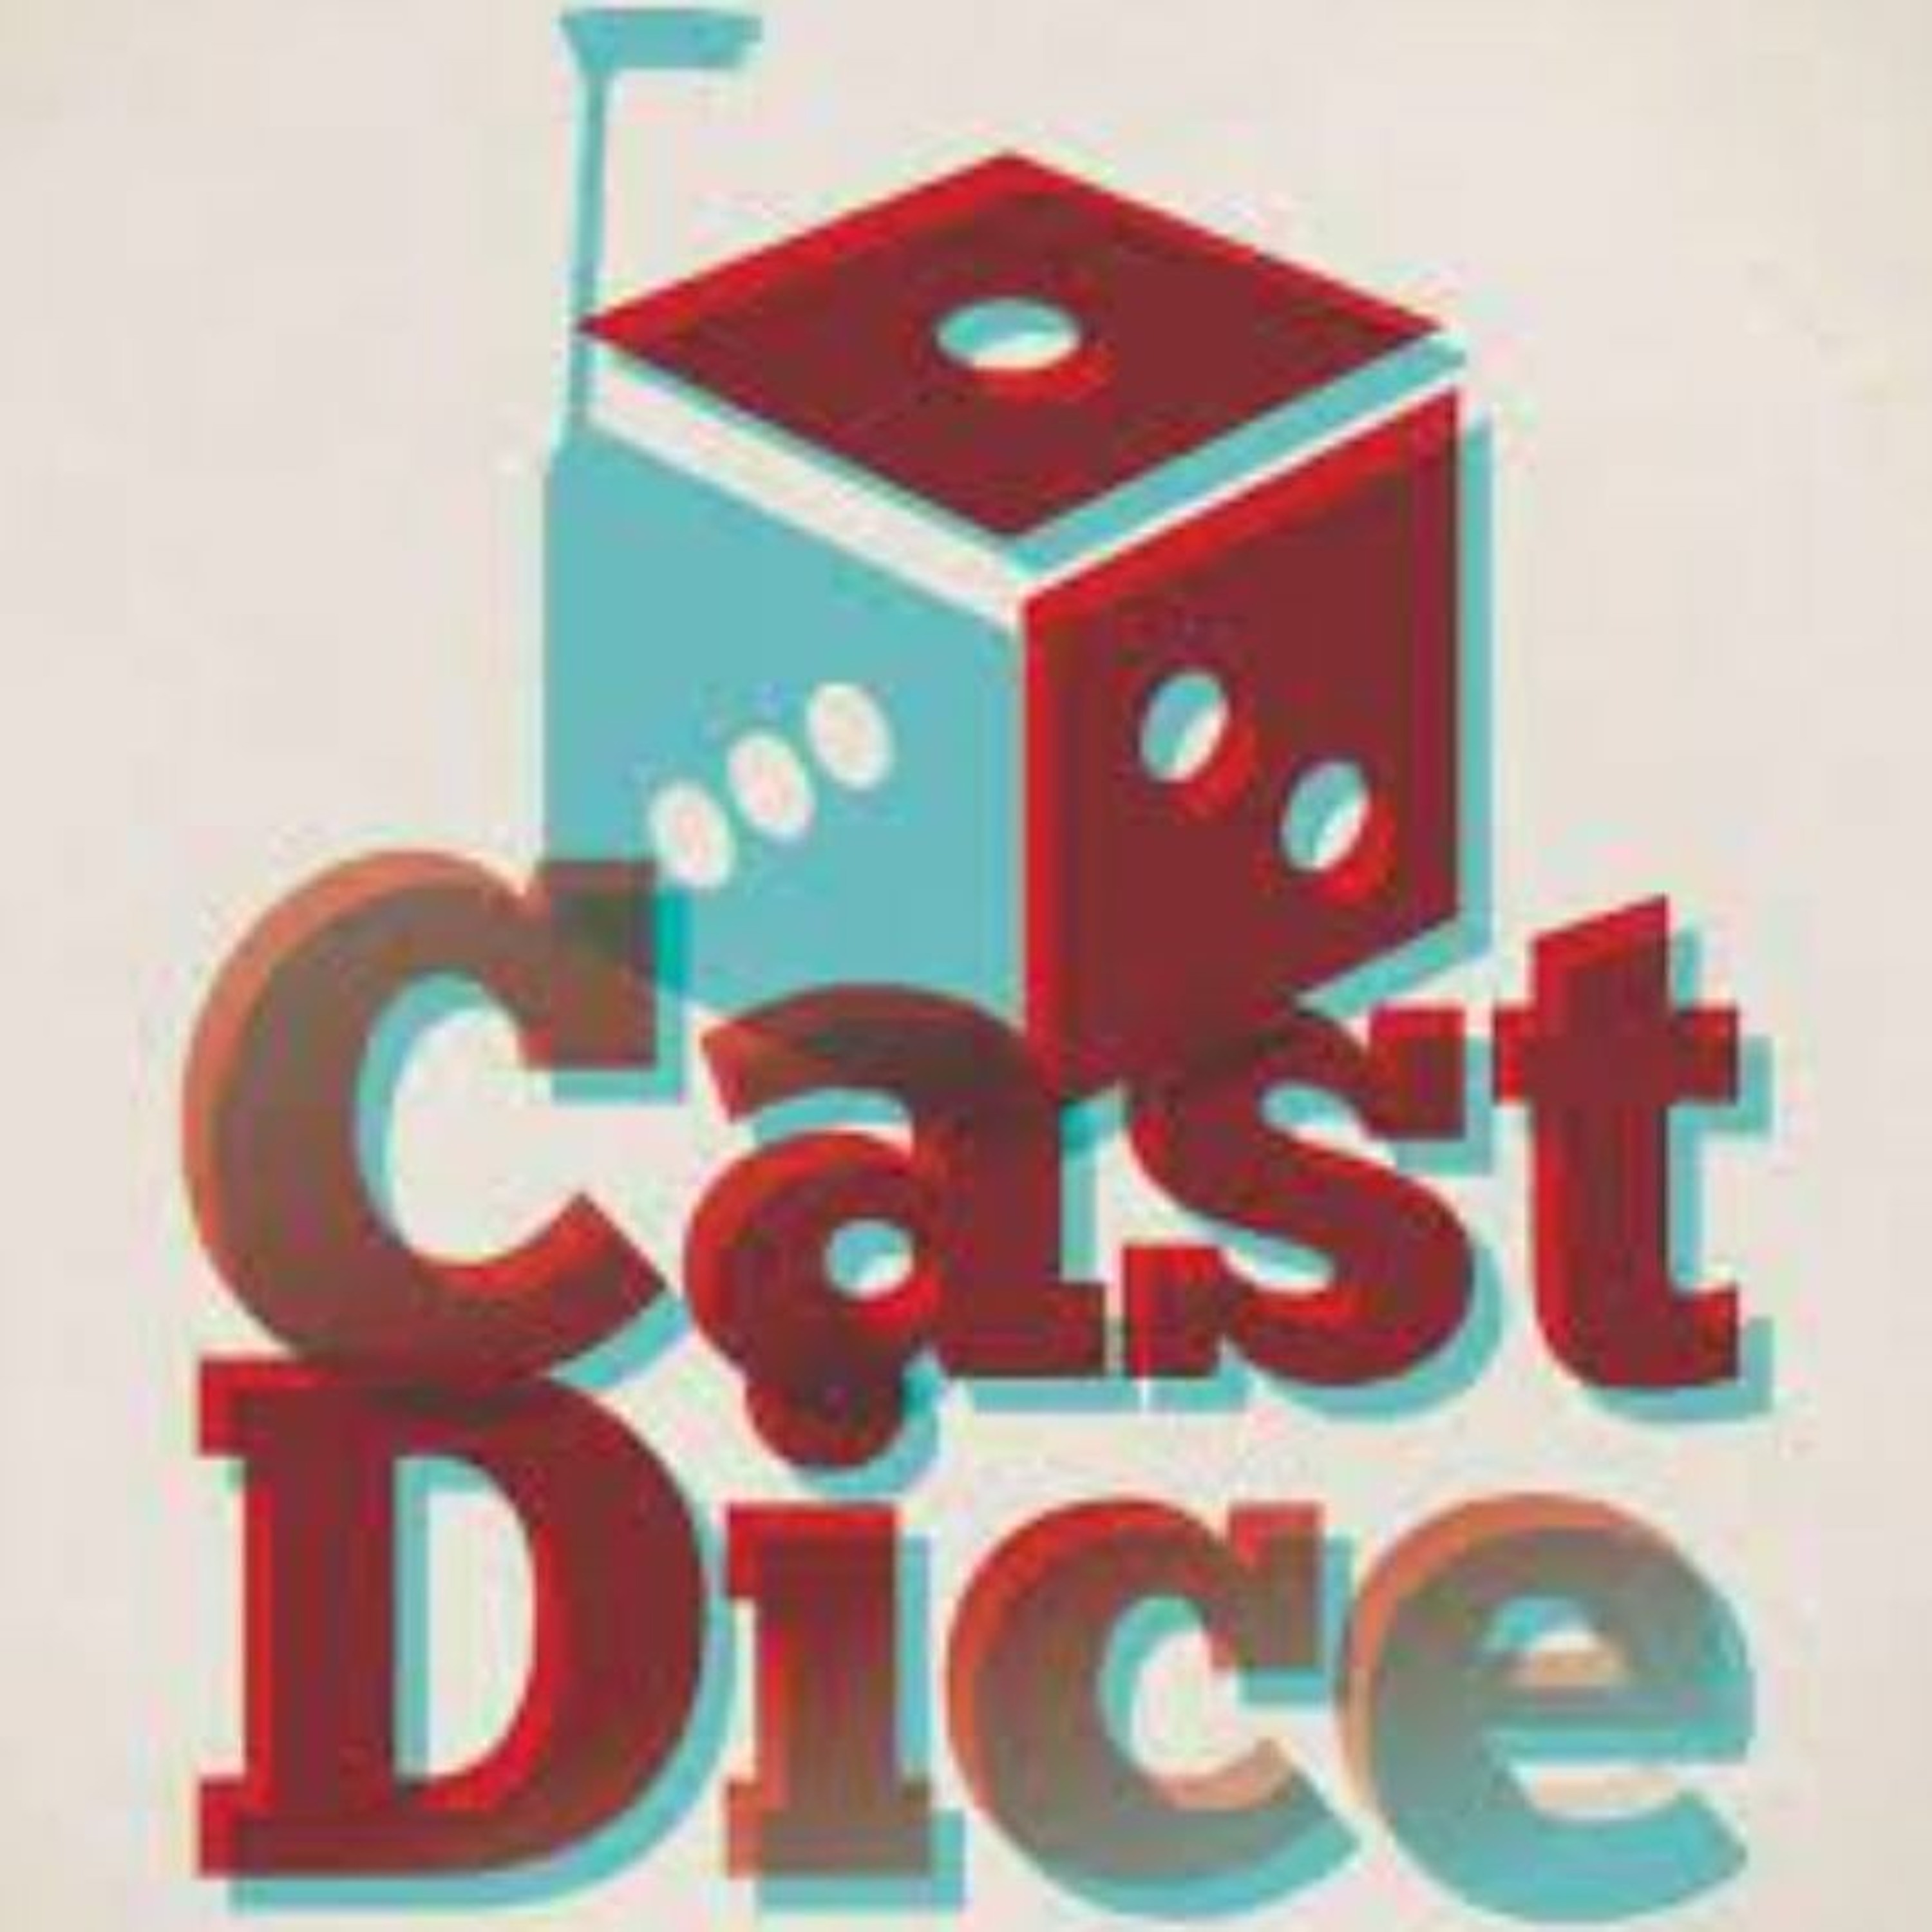 The Cast Dice Podcast - Ep 198 - Megatron Cup Event